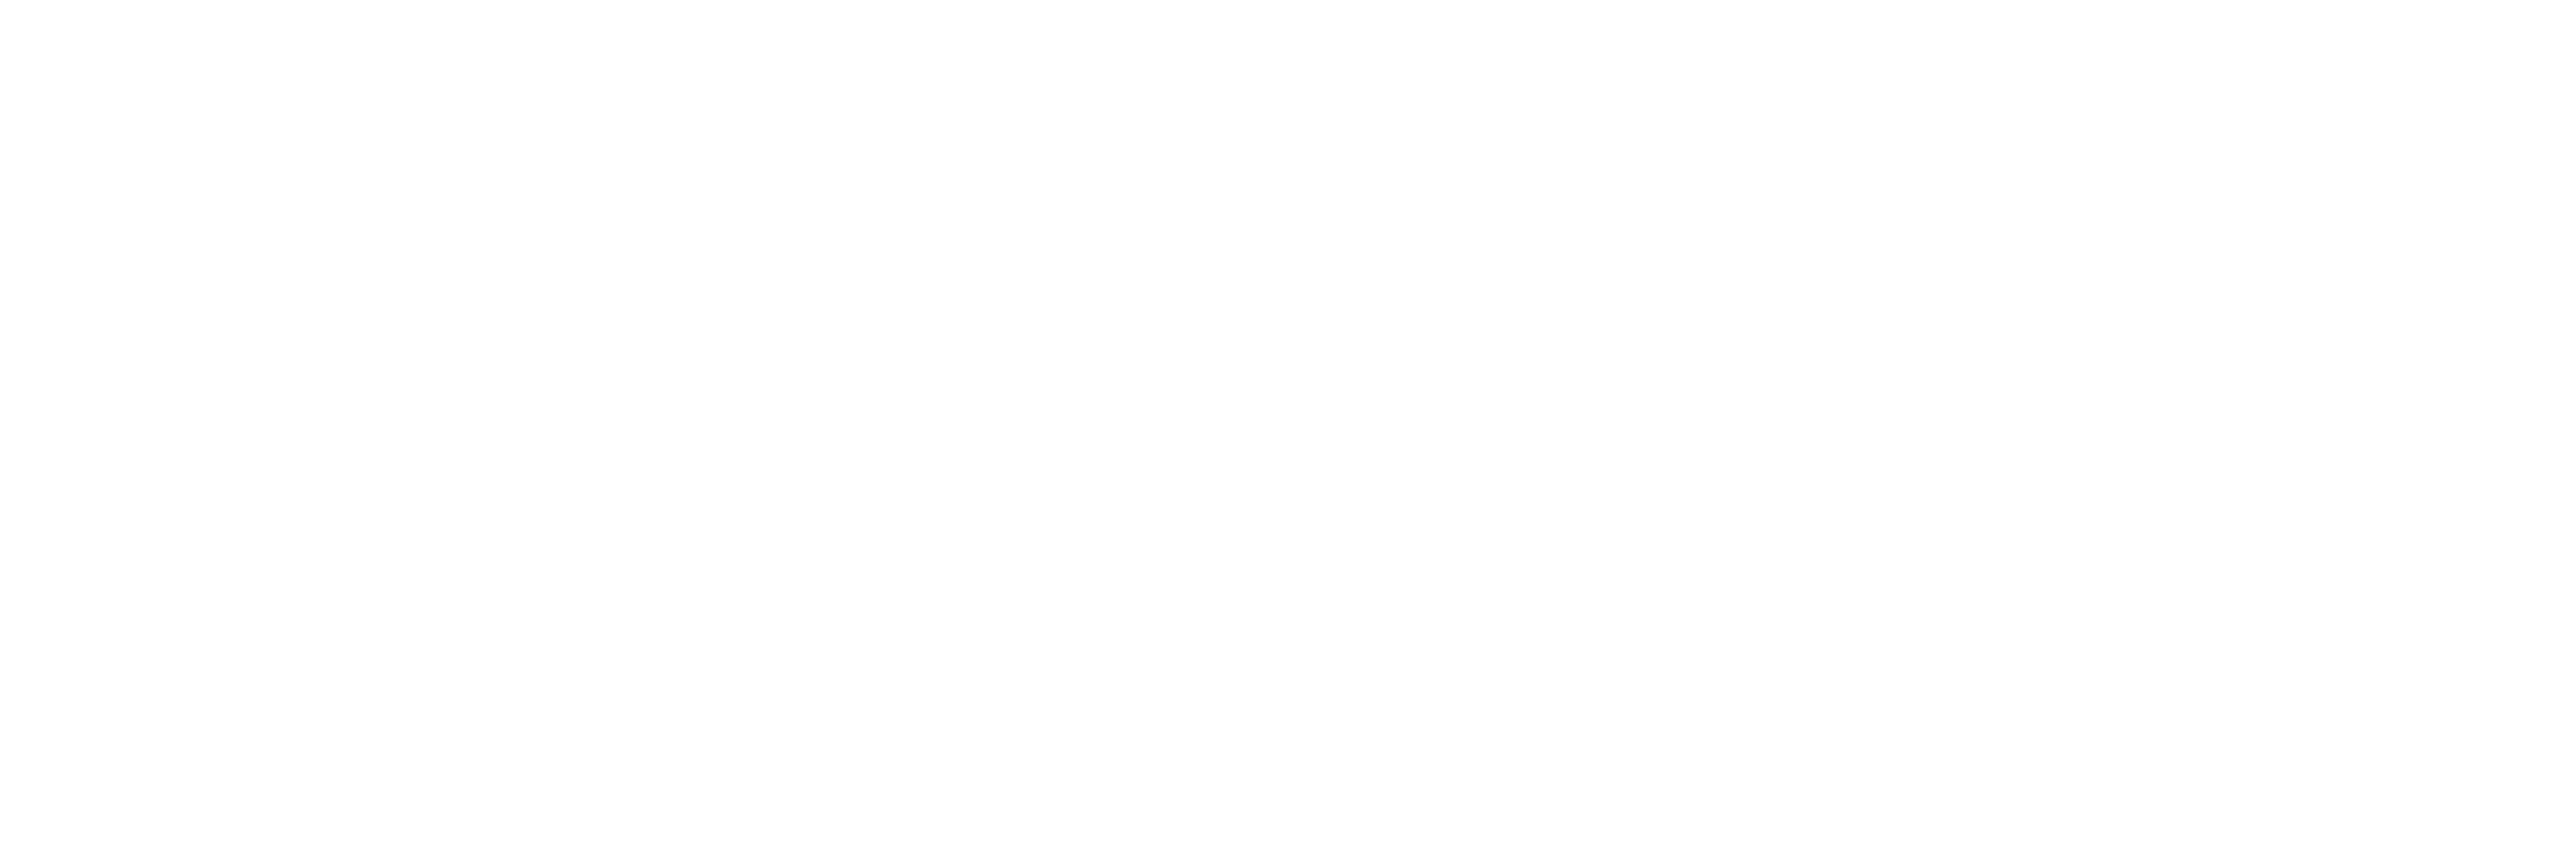 Hey!Broadband logo